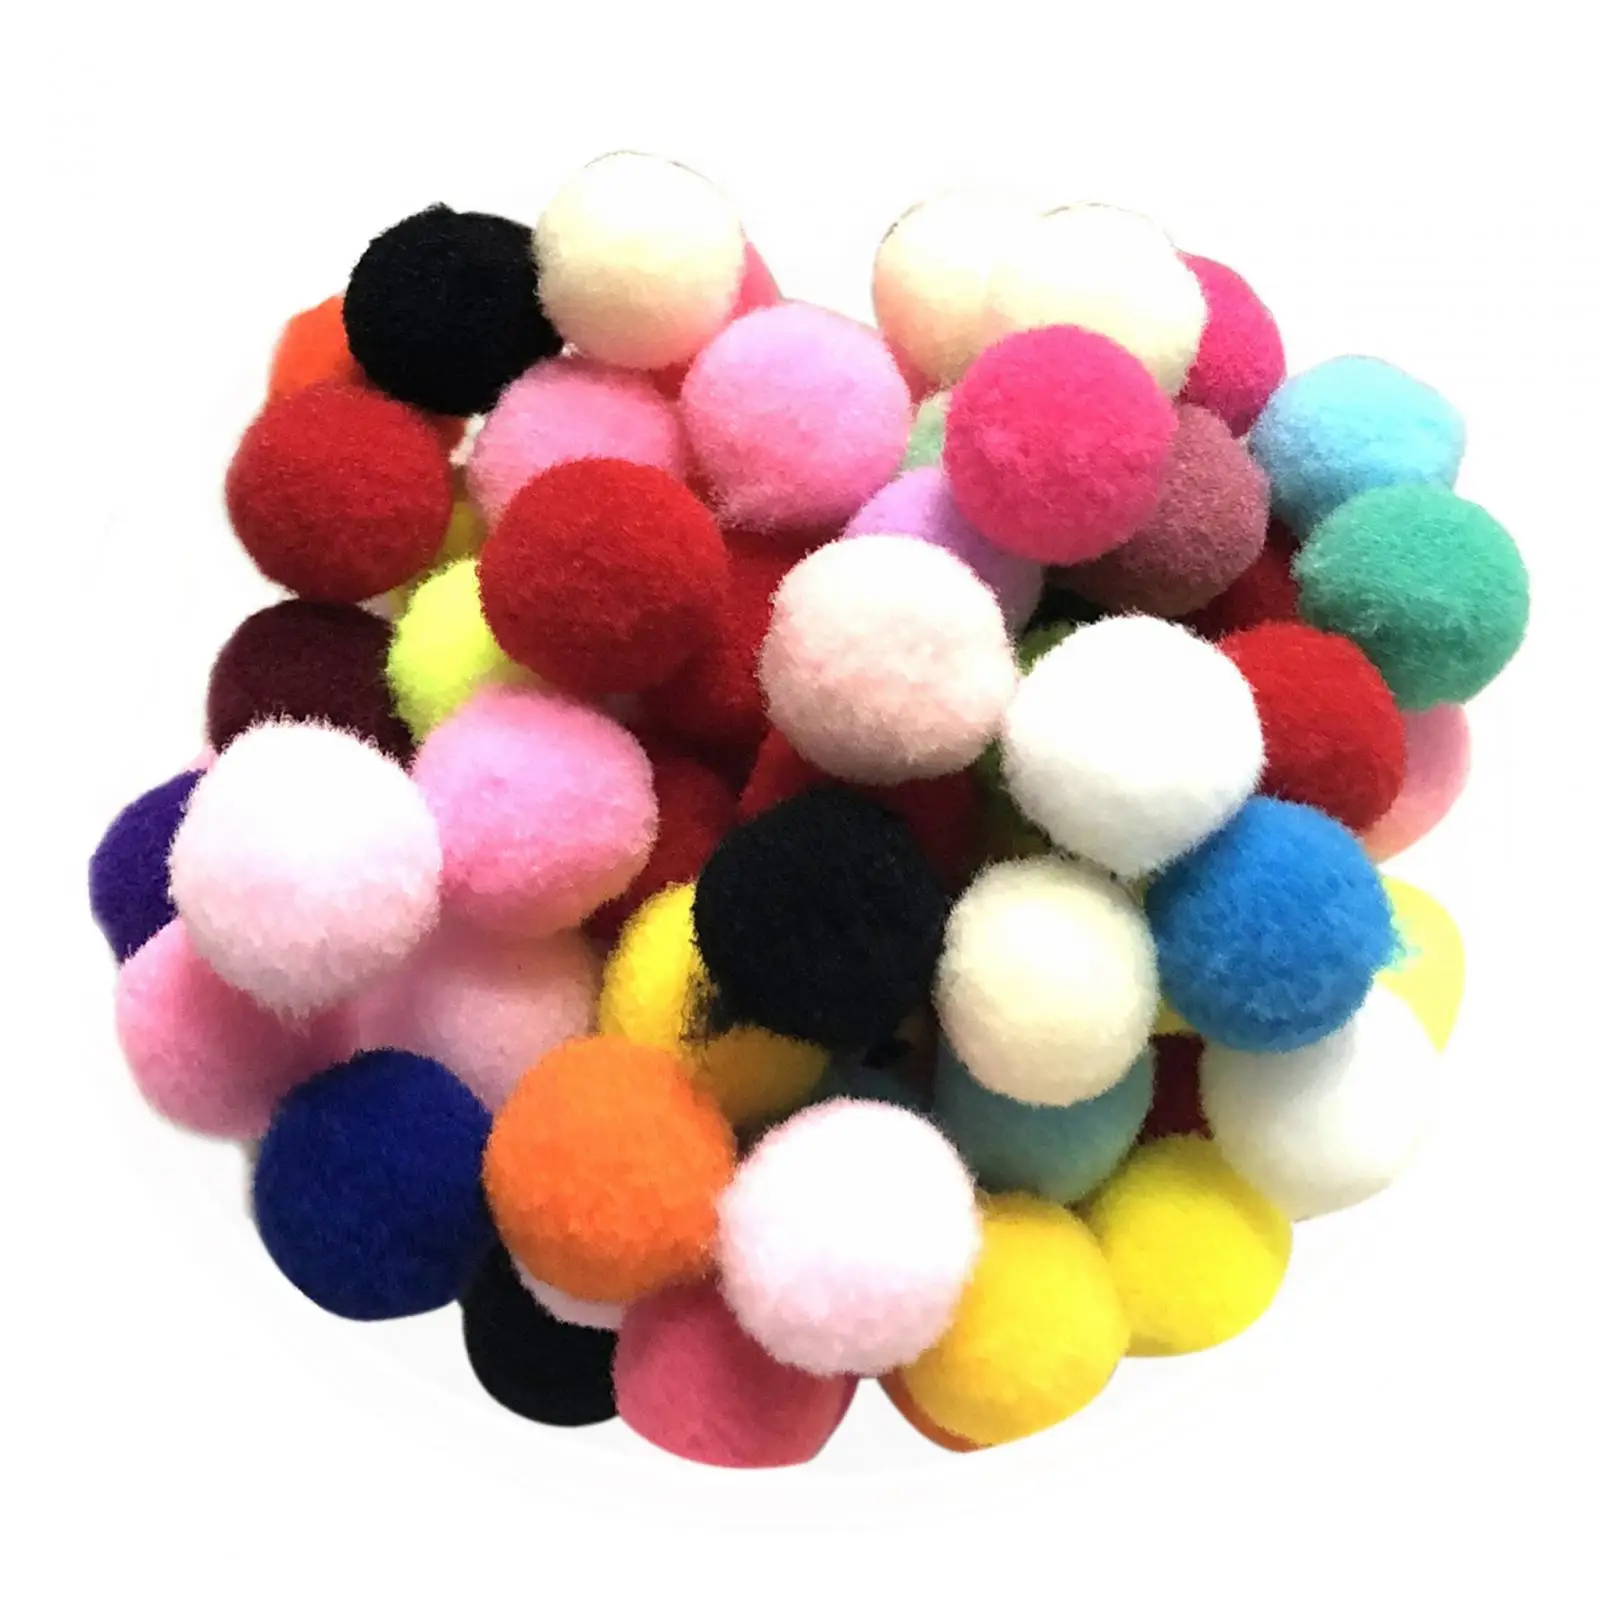 100Pcs Assorted pompoms Craft Arts Pom Poms Balls Mini pompoms Balls Bright Colors Balls for Toys Wedding Decoration